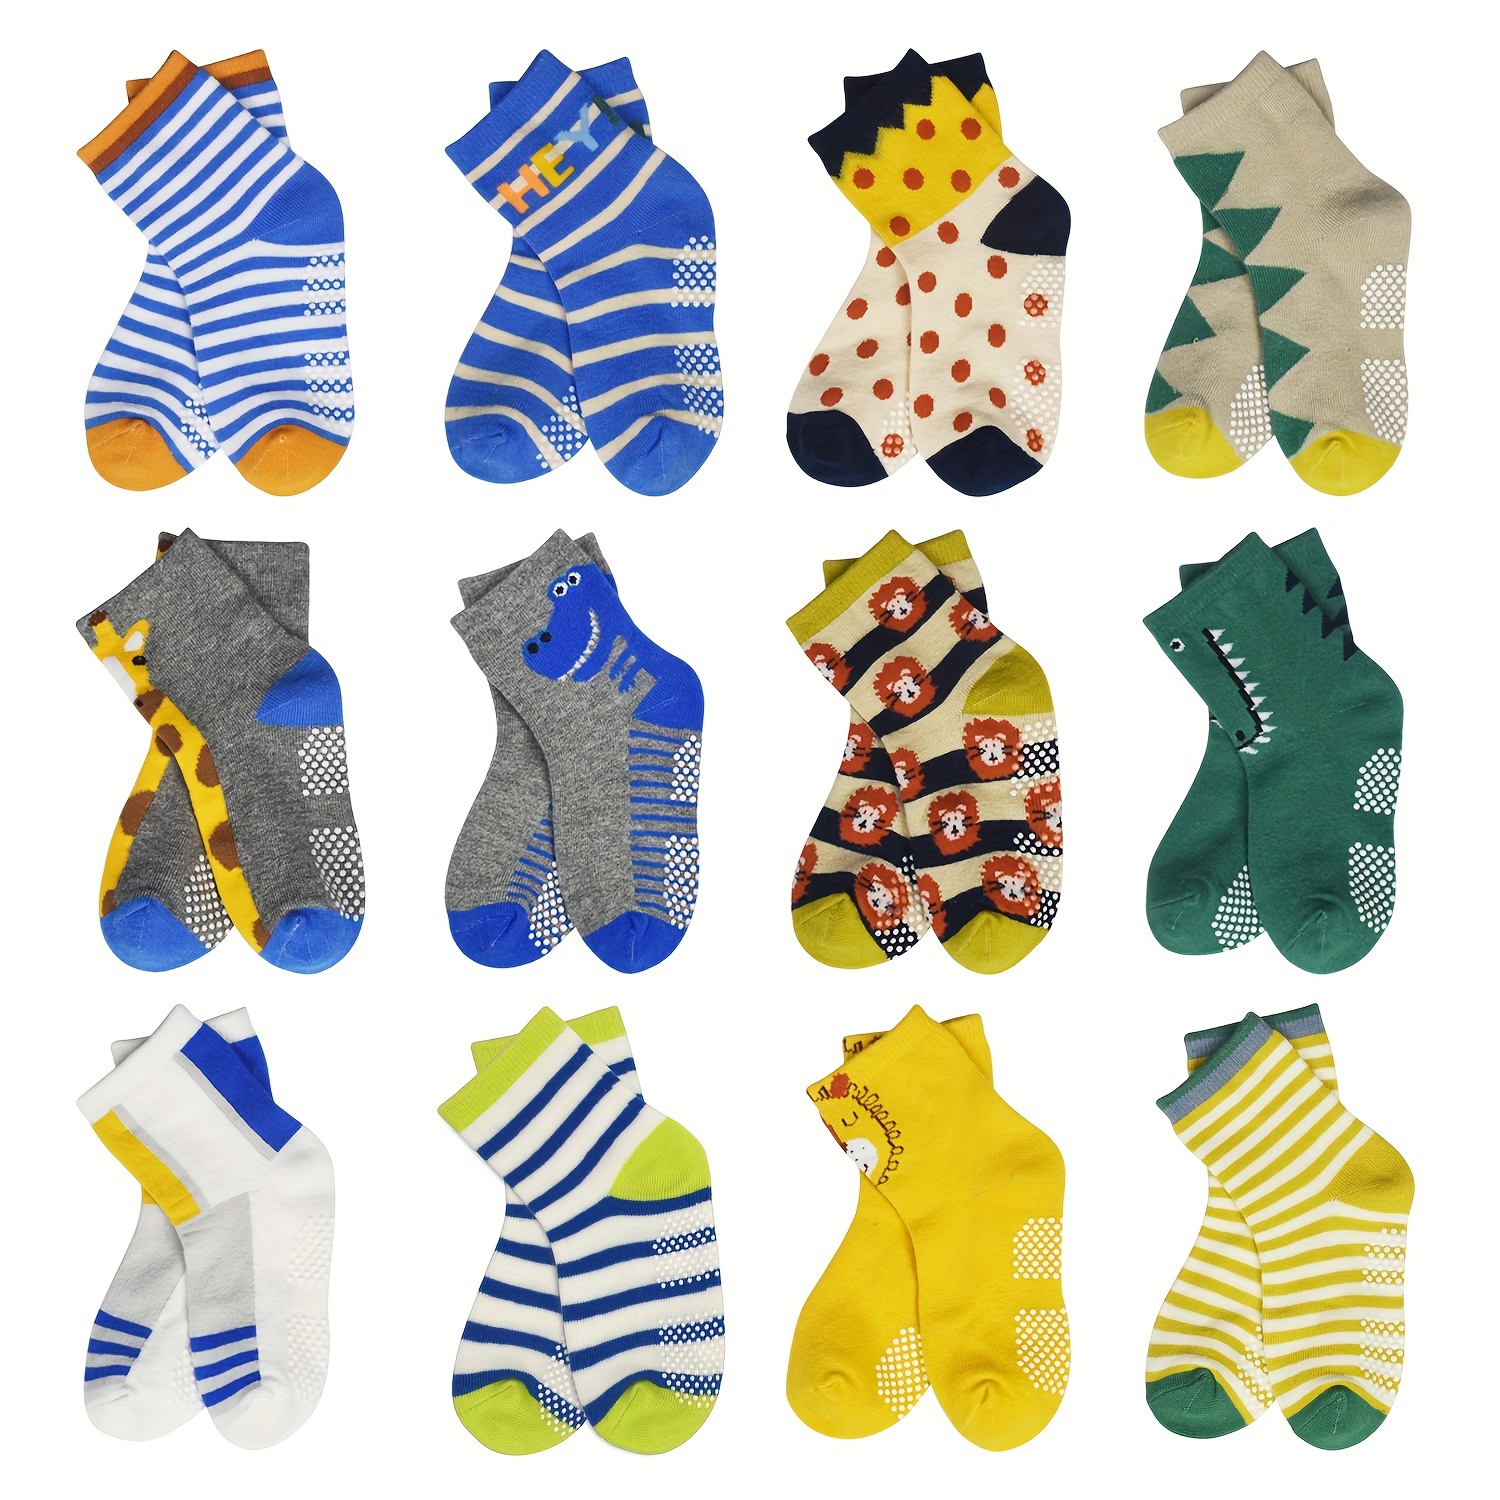 12 Pairs Boys Kids Socks With Grips Anti Slip Bottom, Breathable Comfy  Short Socks For Toddlers Children